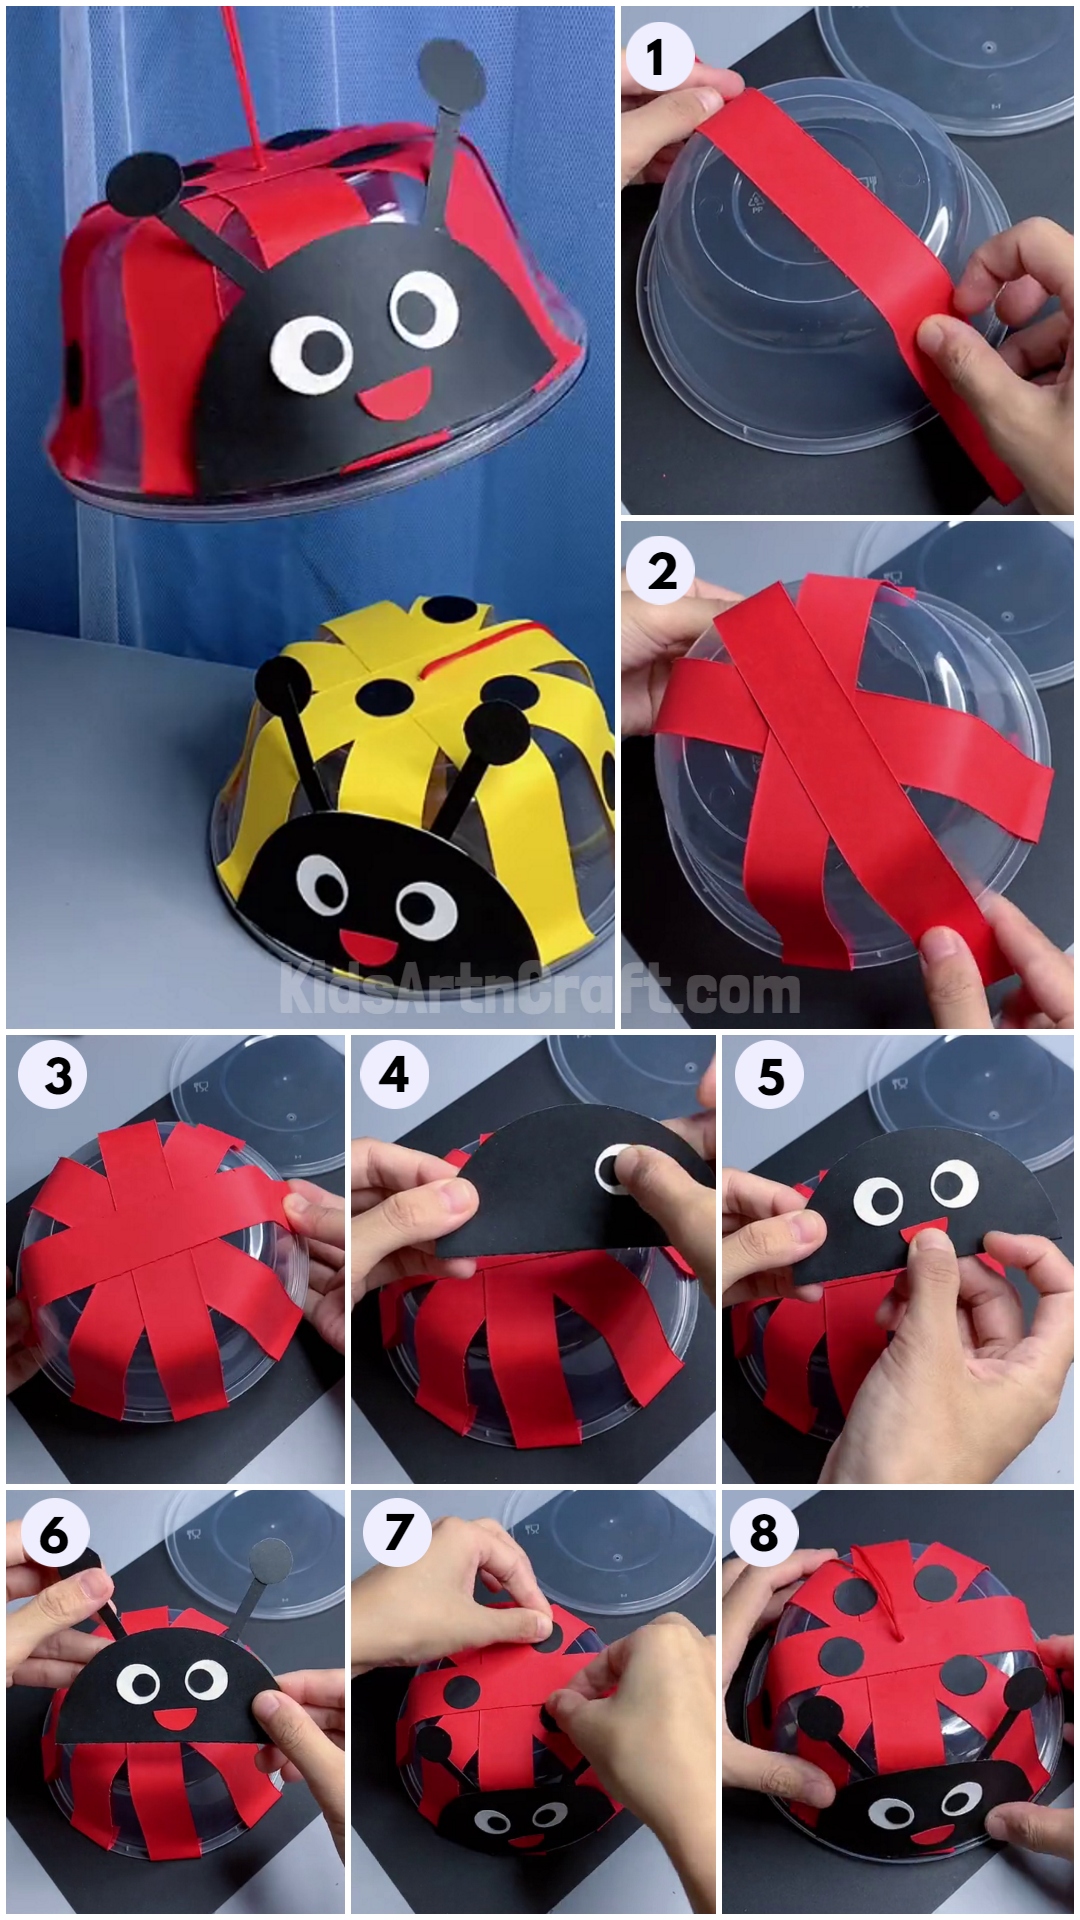 Easy to Make Lightning Ladybug Craft Tutorial for Kids